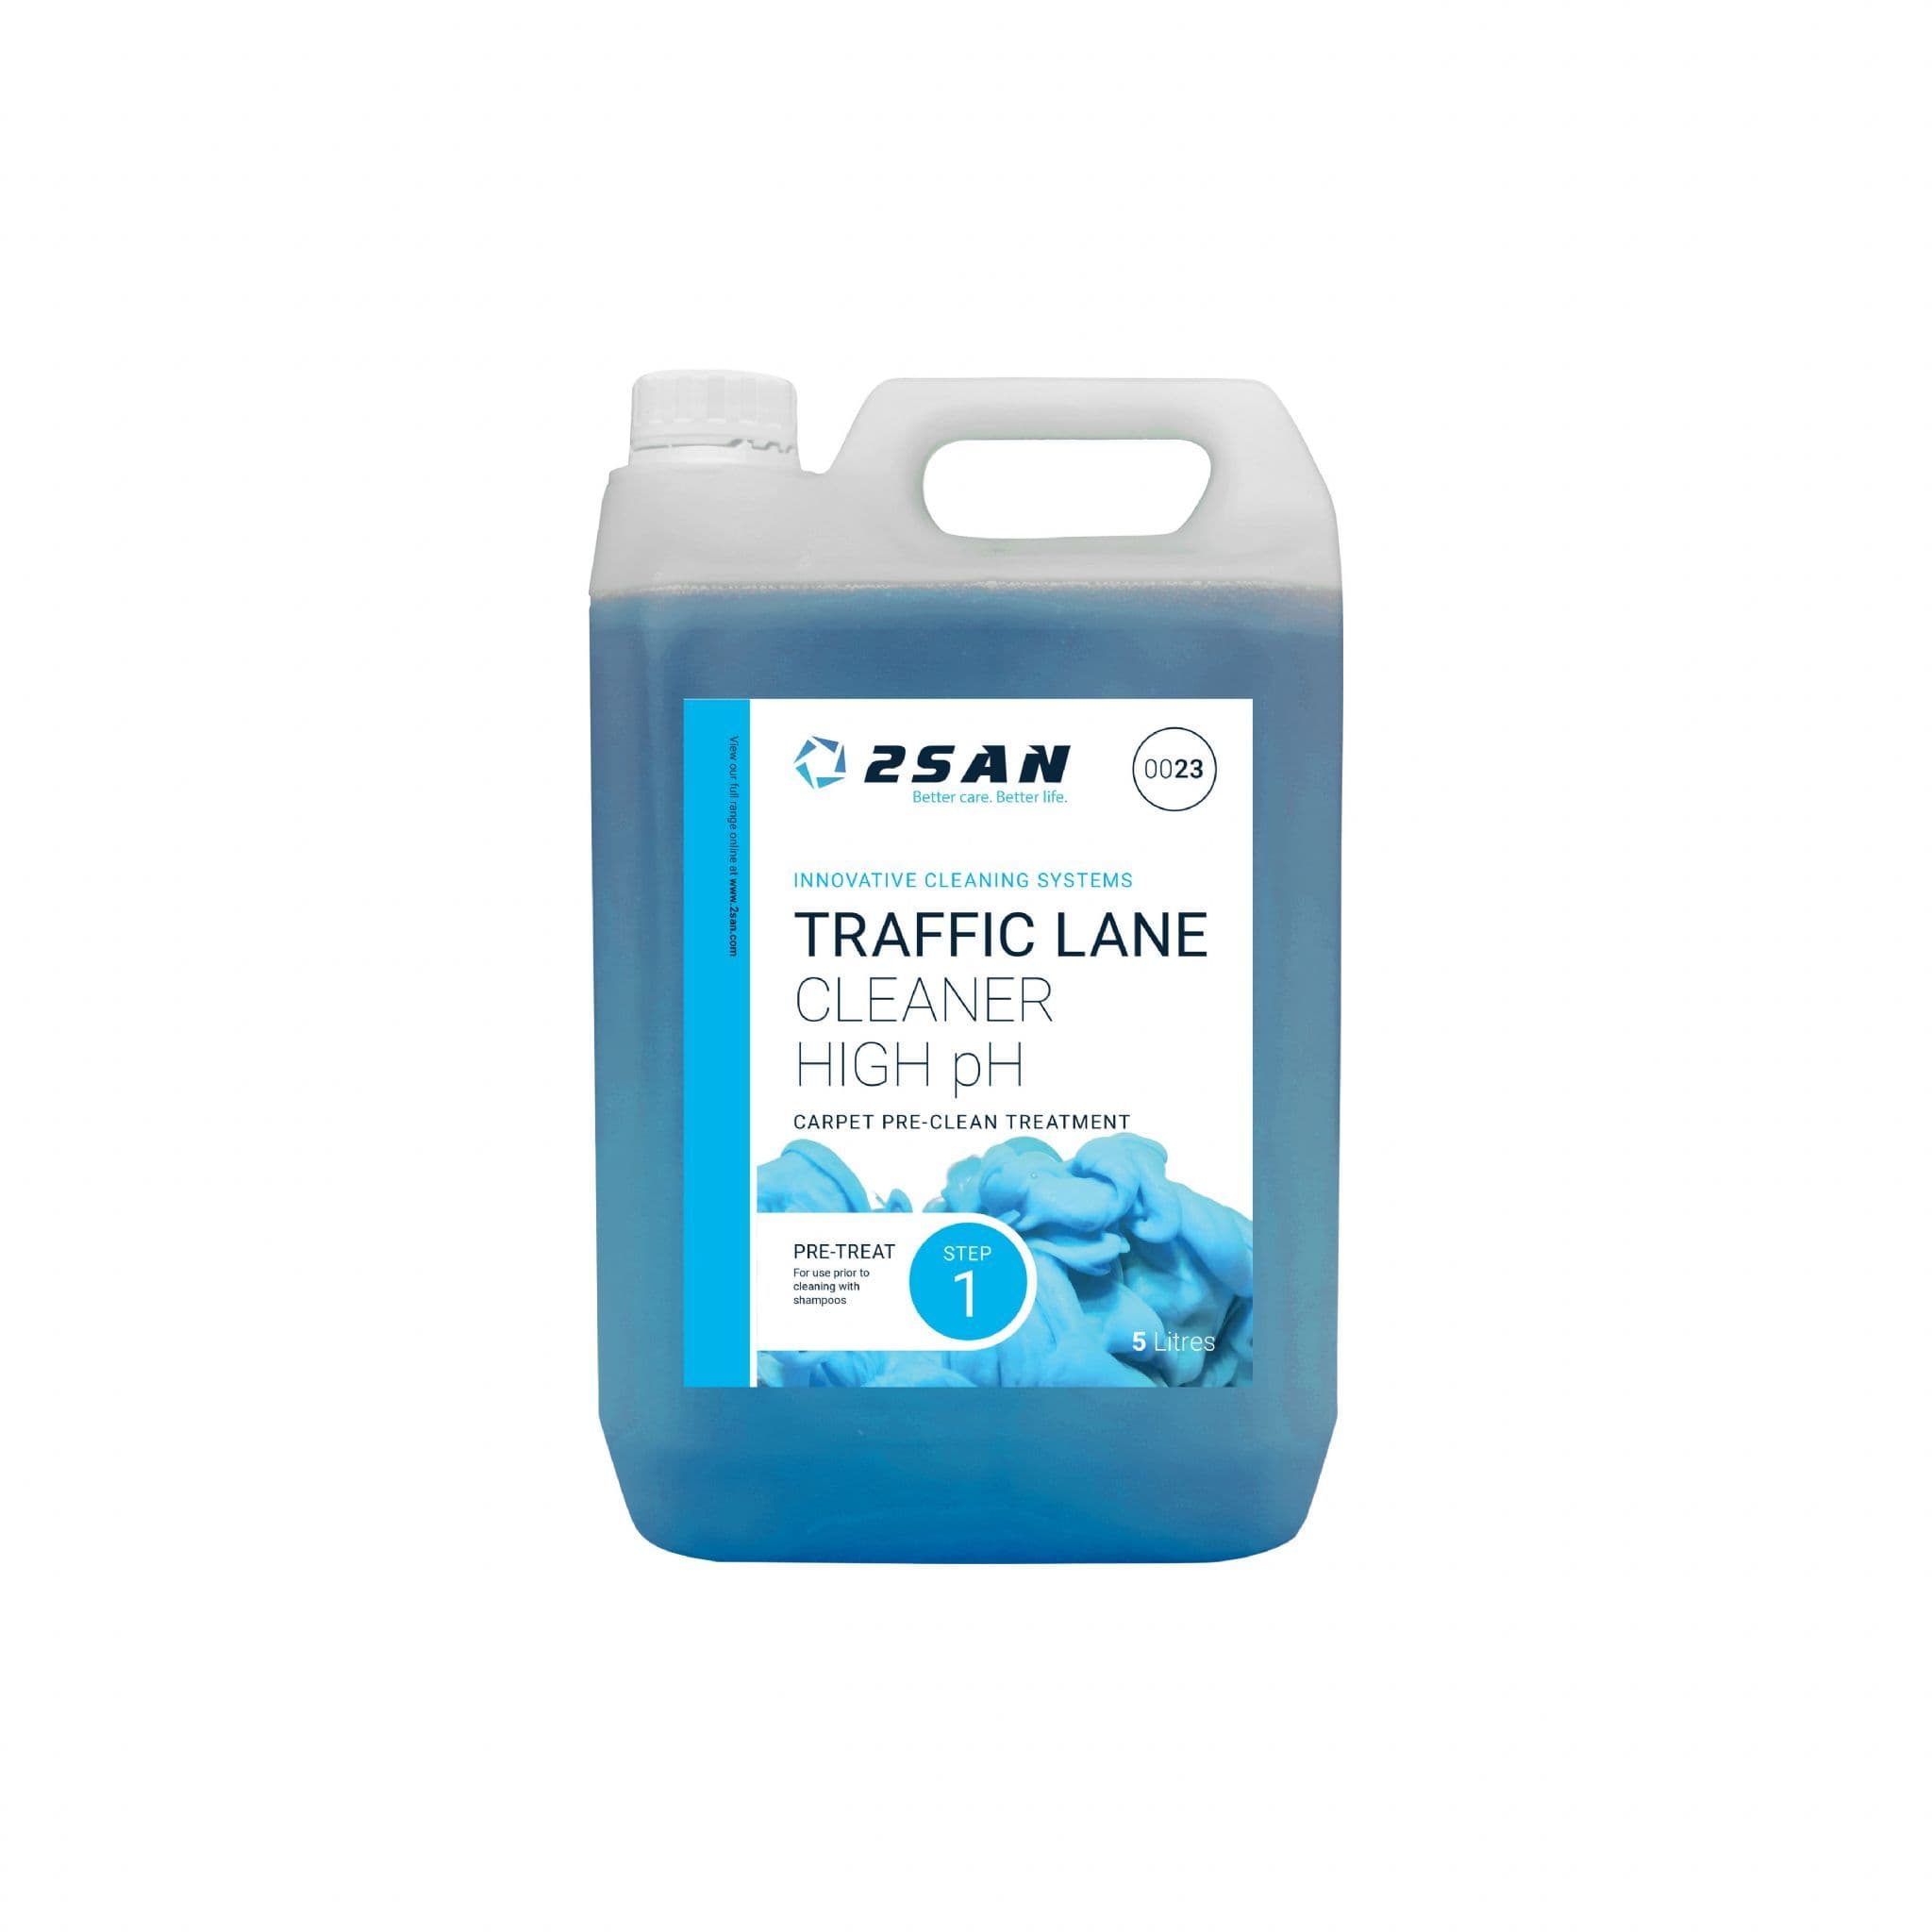 2SAN(Craftex) Traffic Lane Cleaner High pH 5L 0023